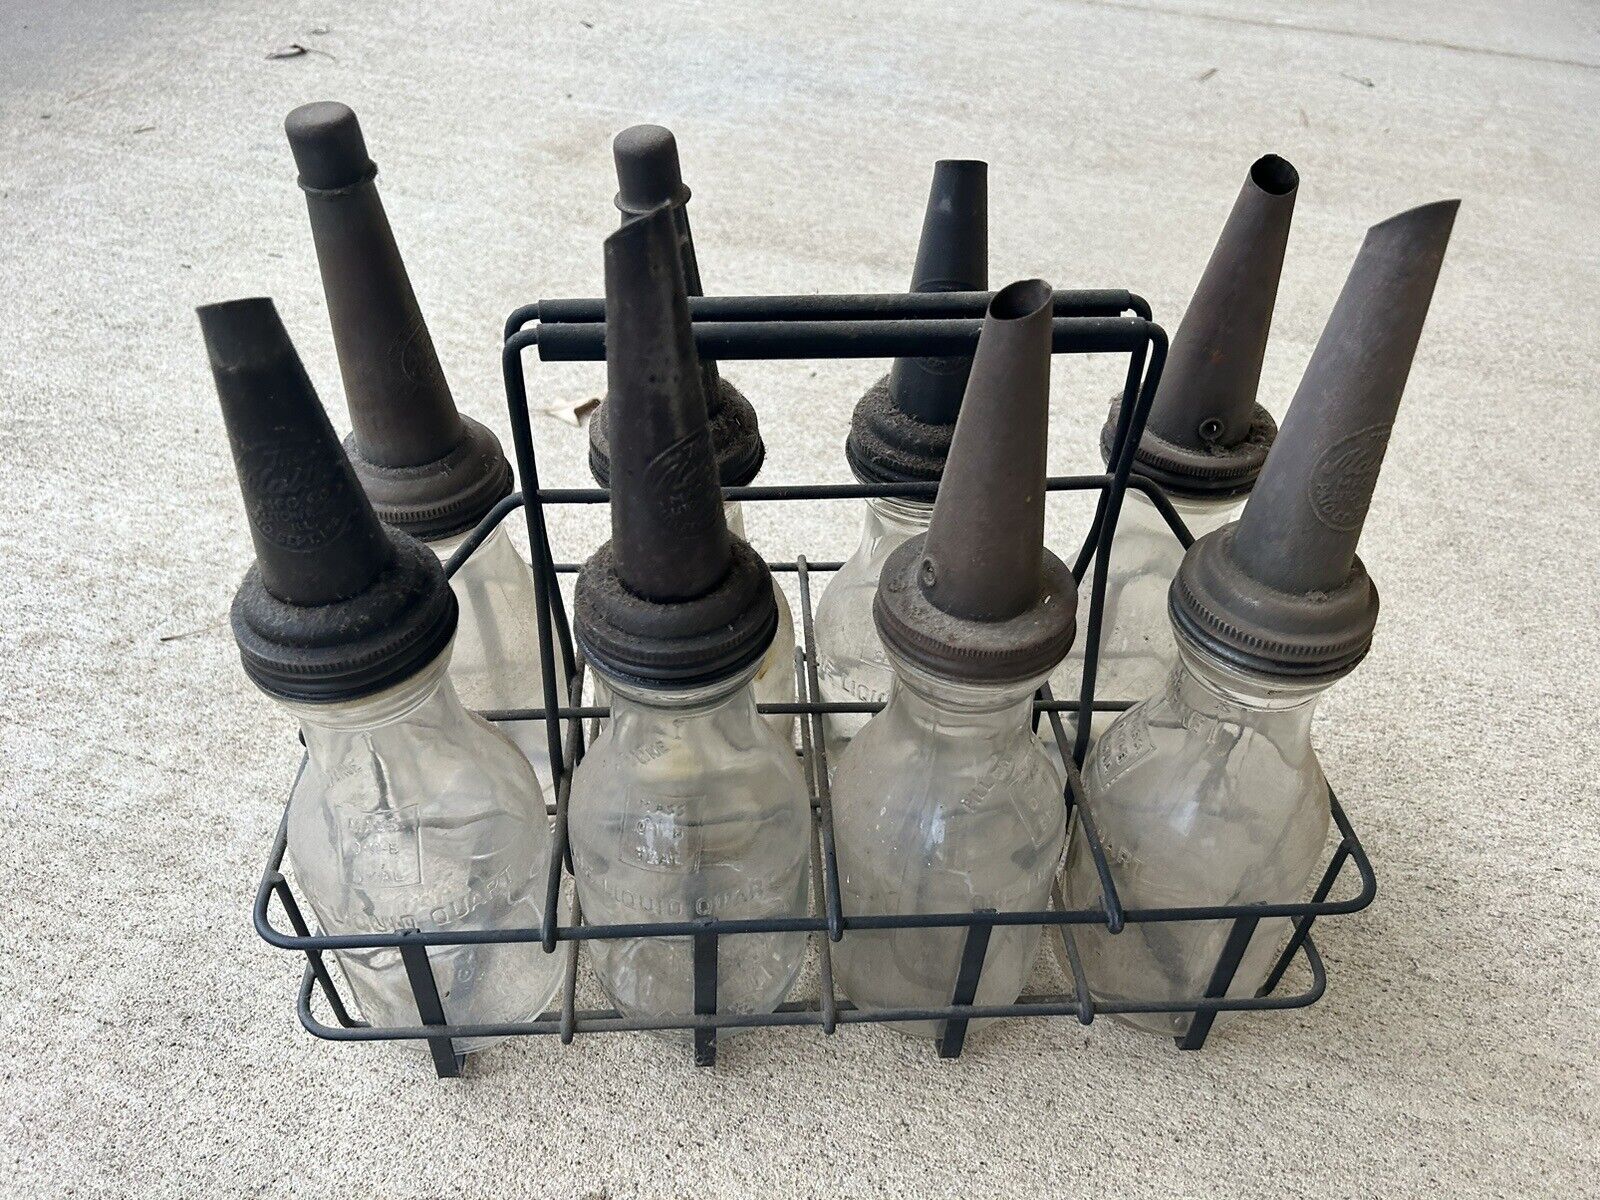 Antique Vintage Set Of 8 Glass Motor Oil Bottles With Tin Tops, In Carrier